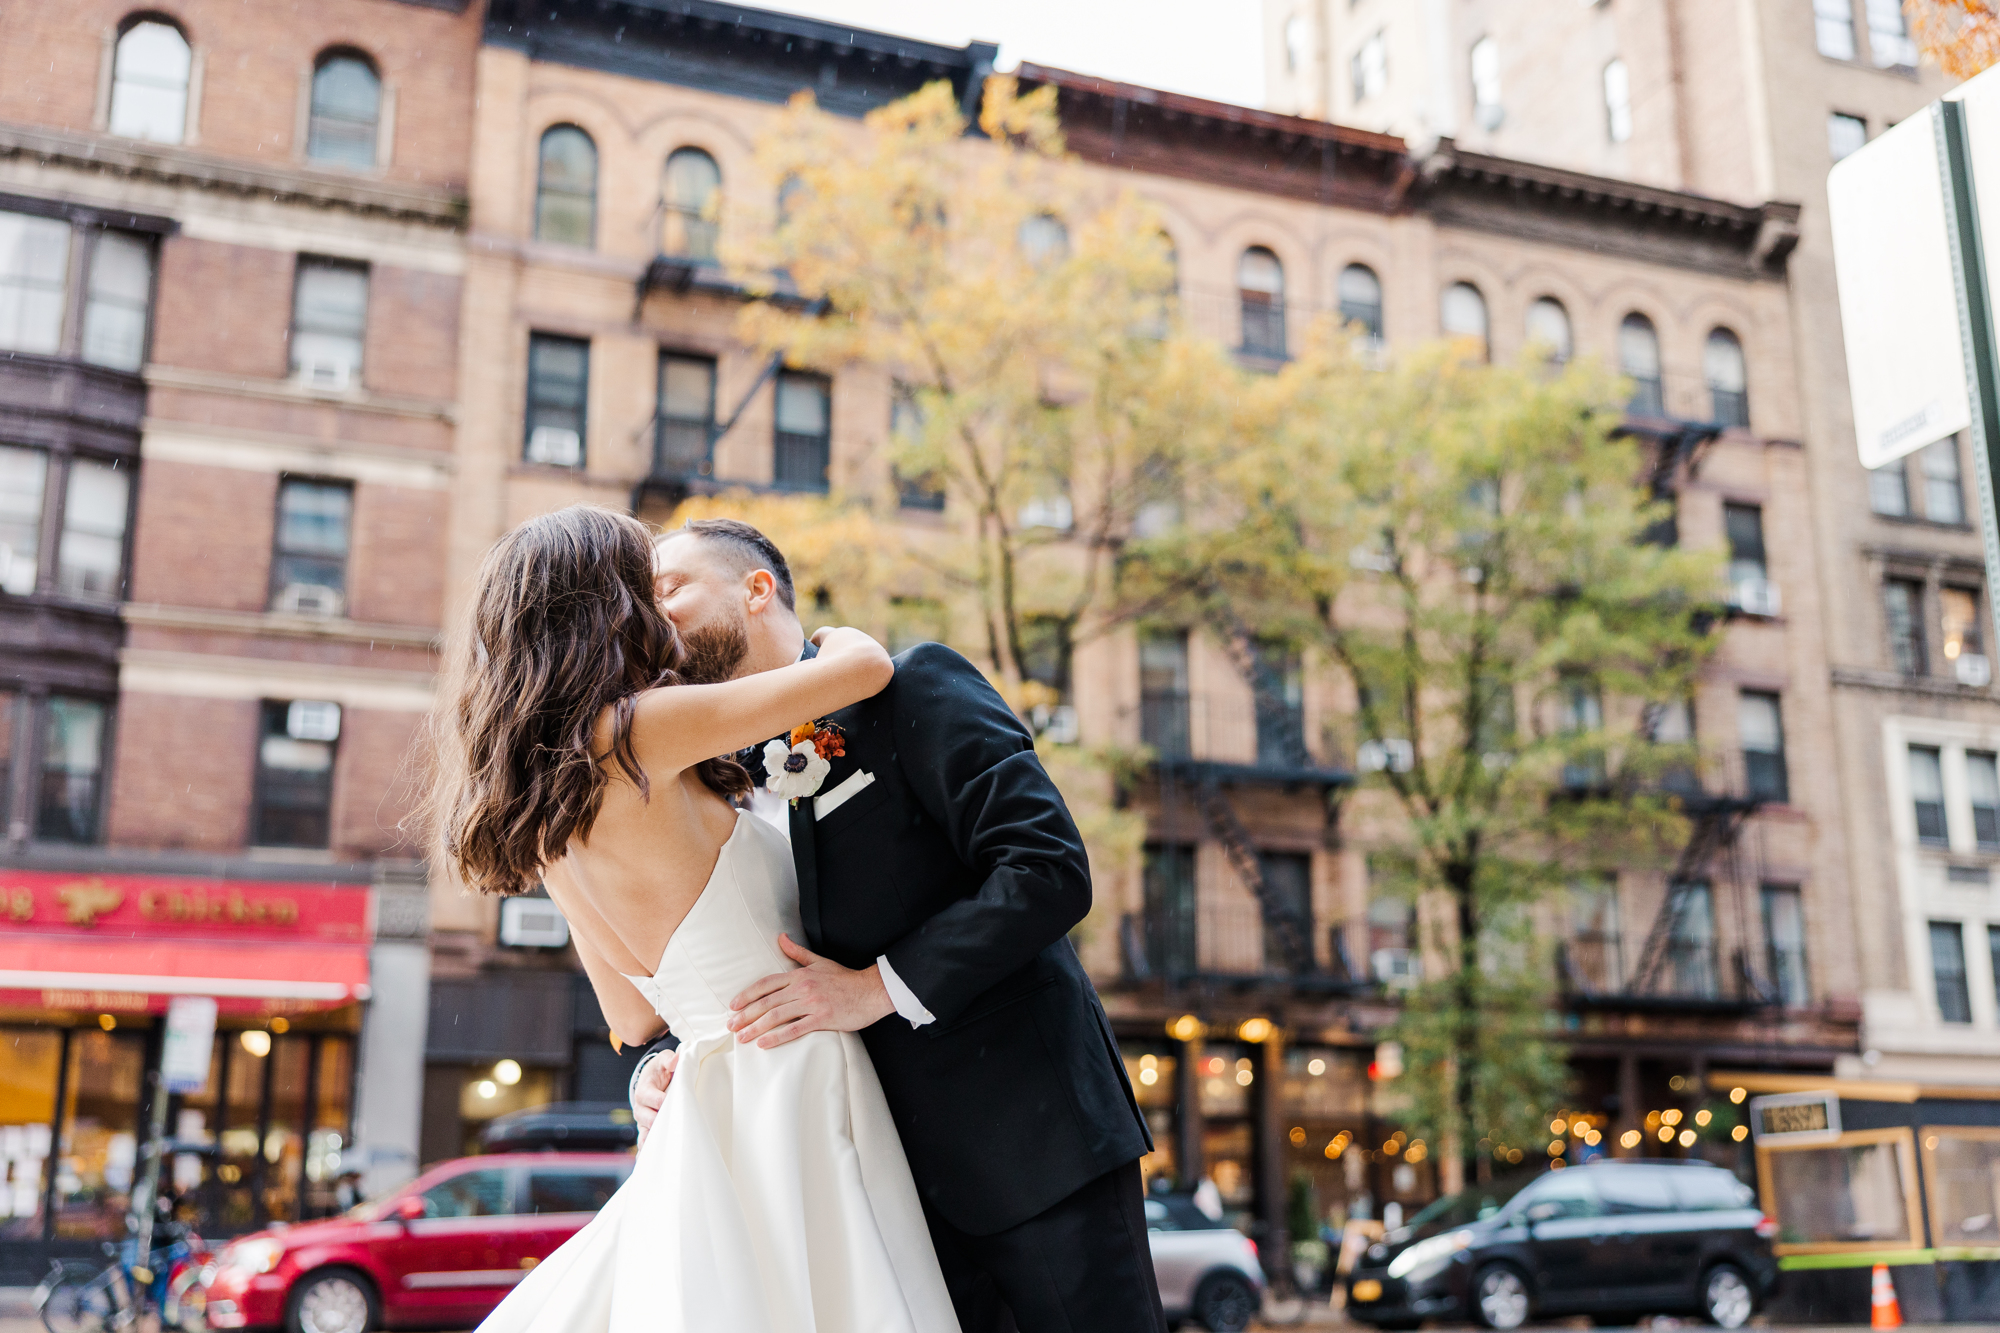 Intimate Rainy Fall Milling Room Wedding Photos in New York